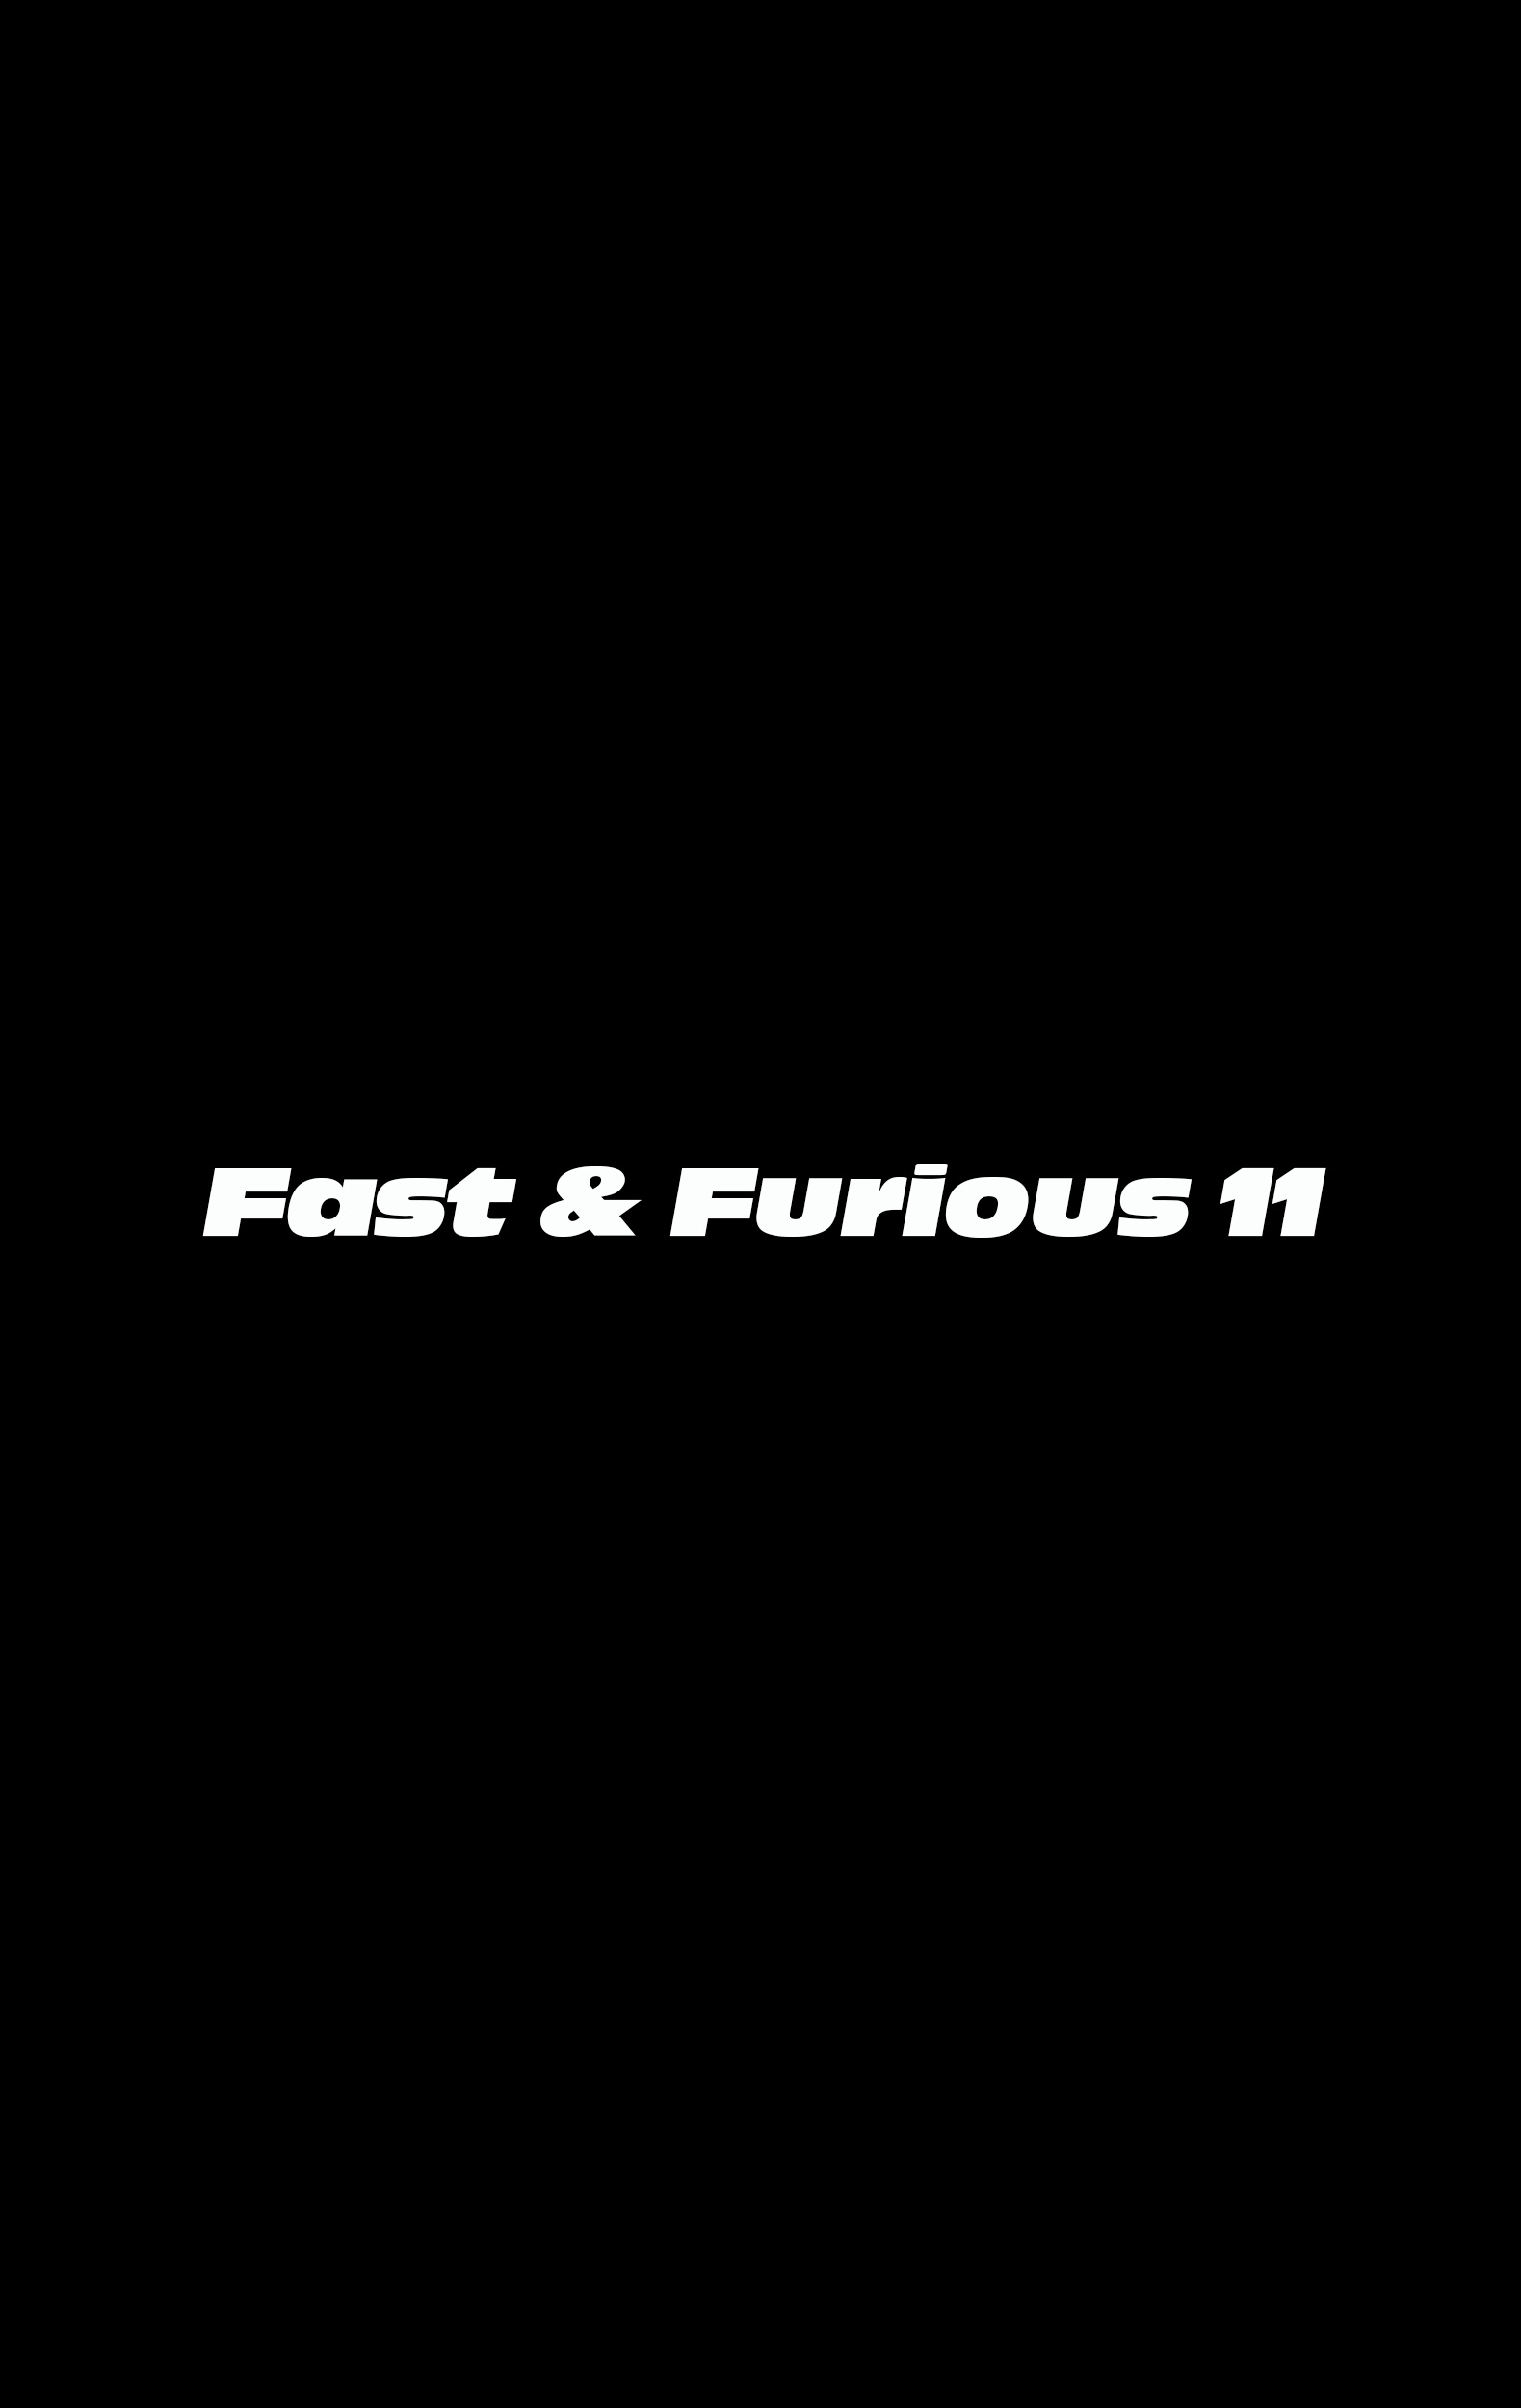 2 Fast 2 Furious - Wikipedia